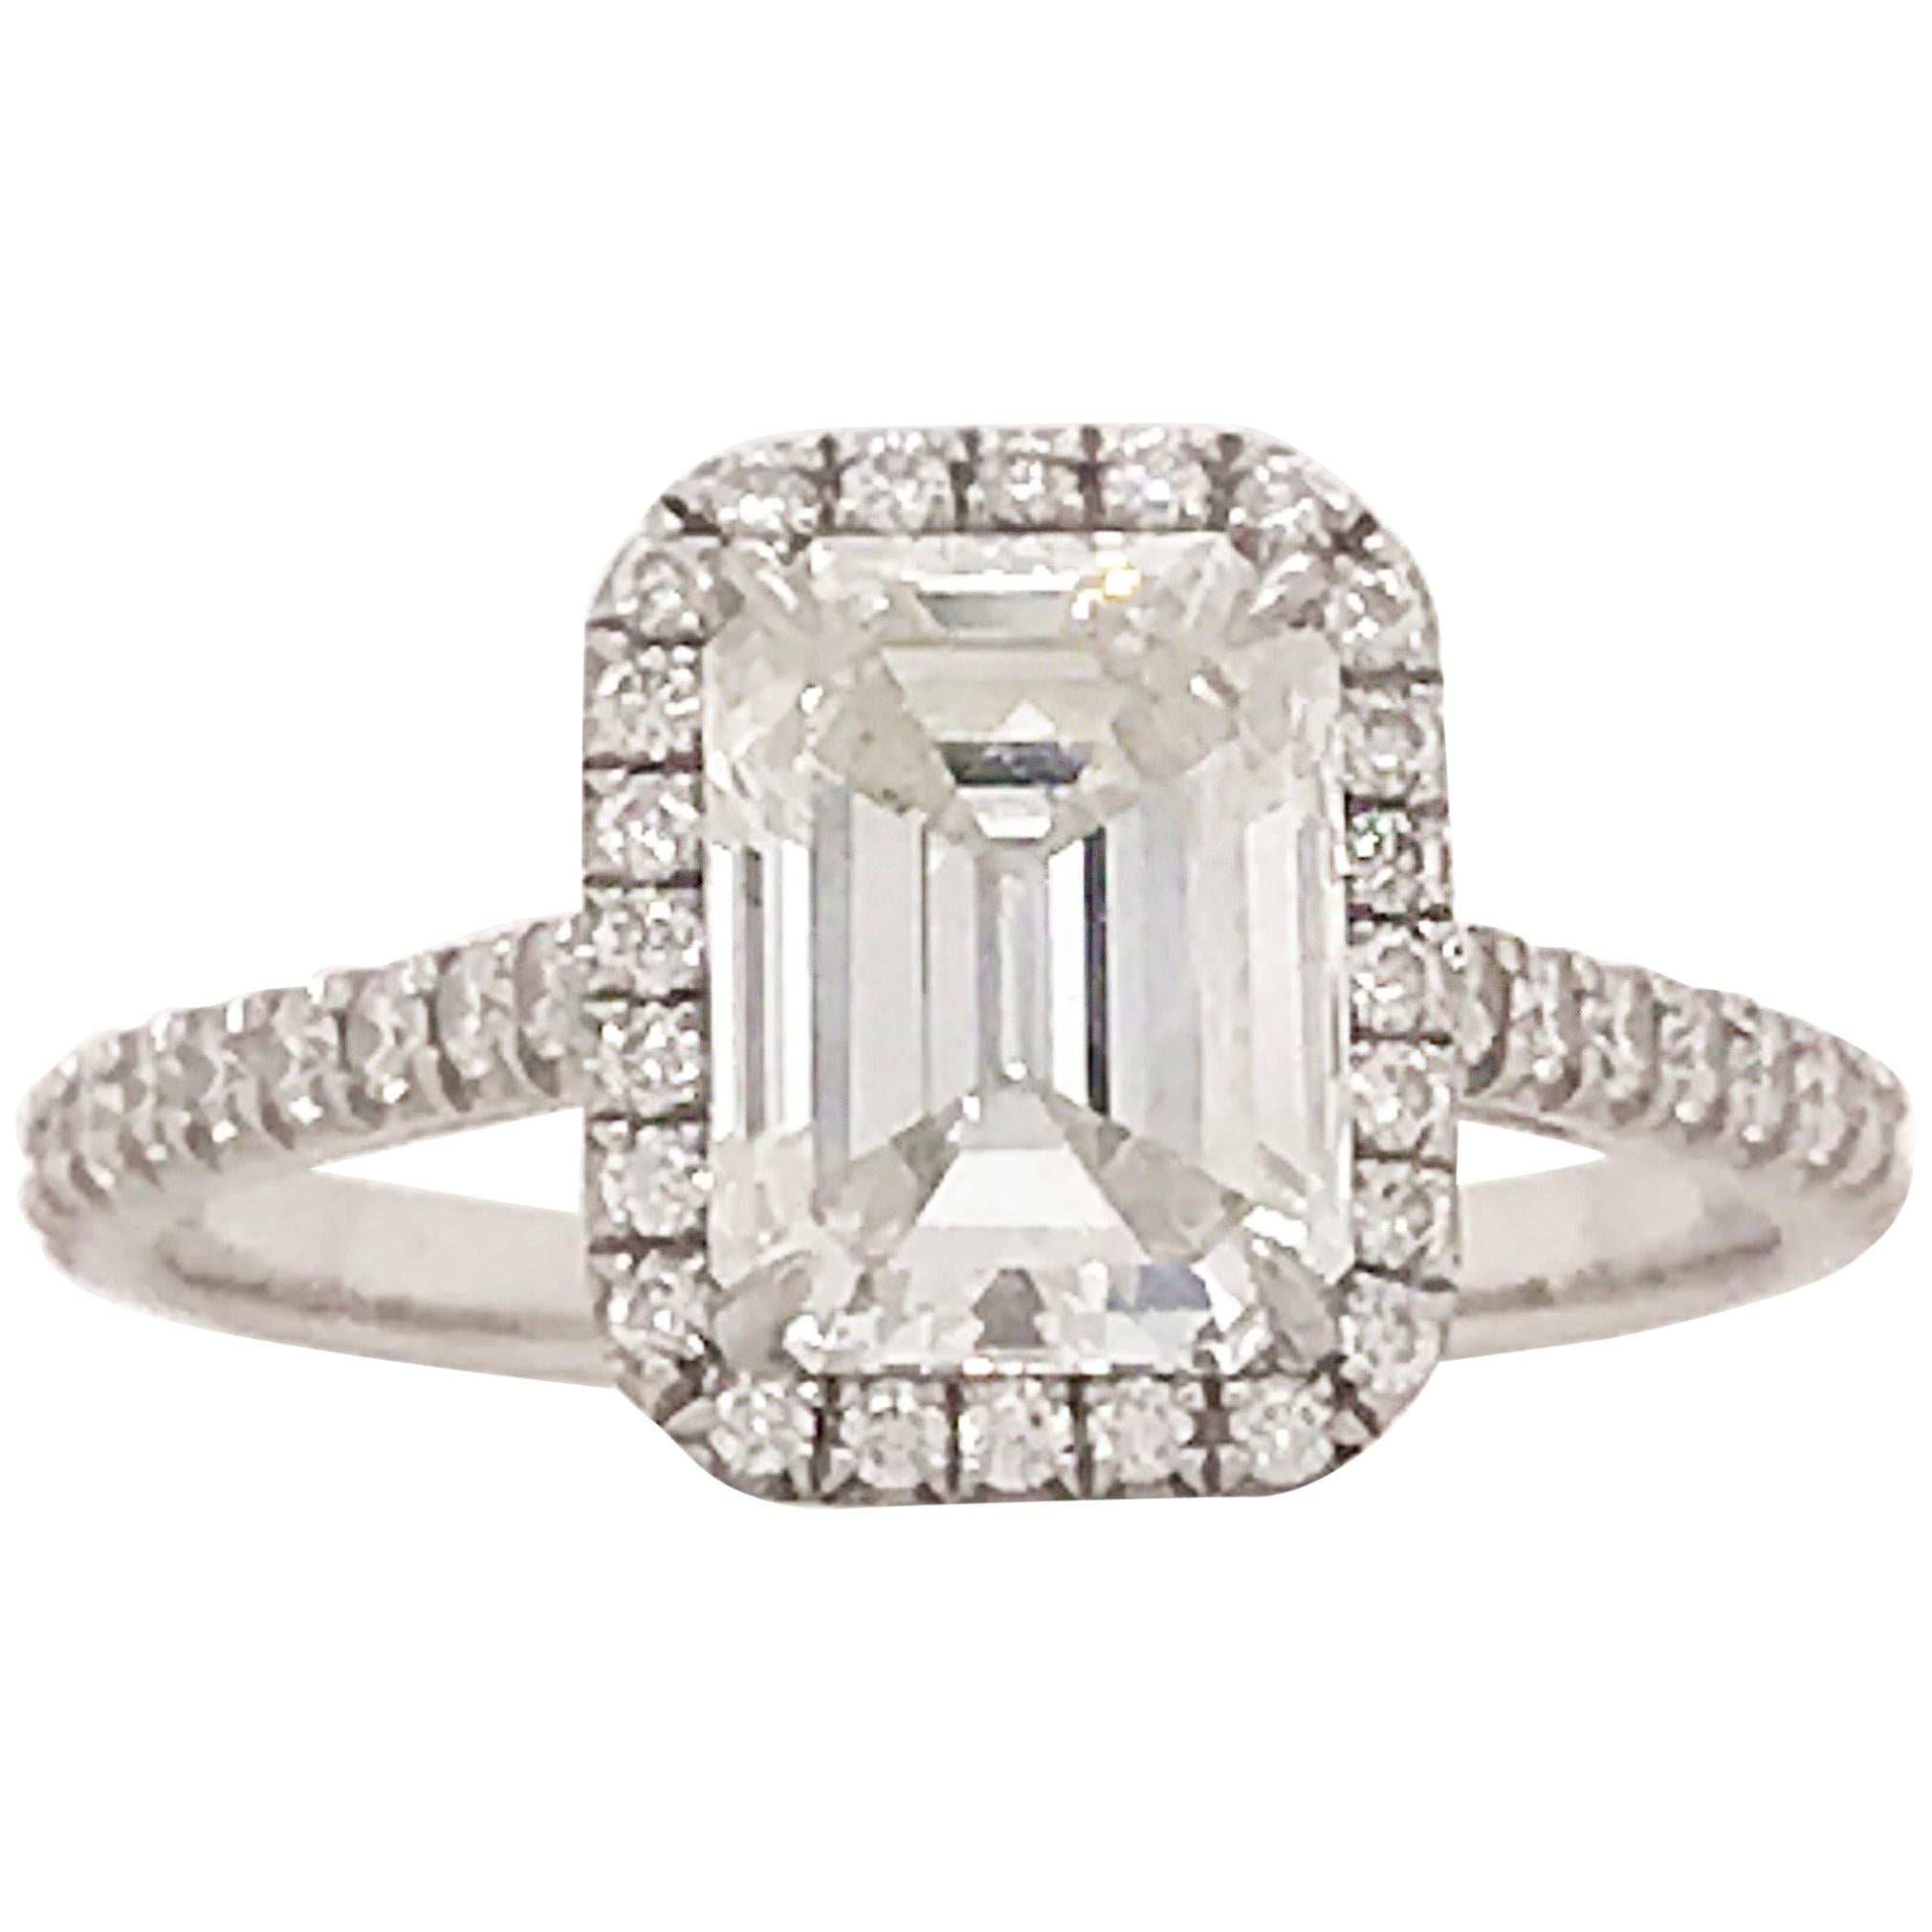 Iconic Original Tiffany & Co. Emerald Diamond Halo Platinum Ring 2 Carat